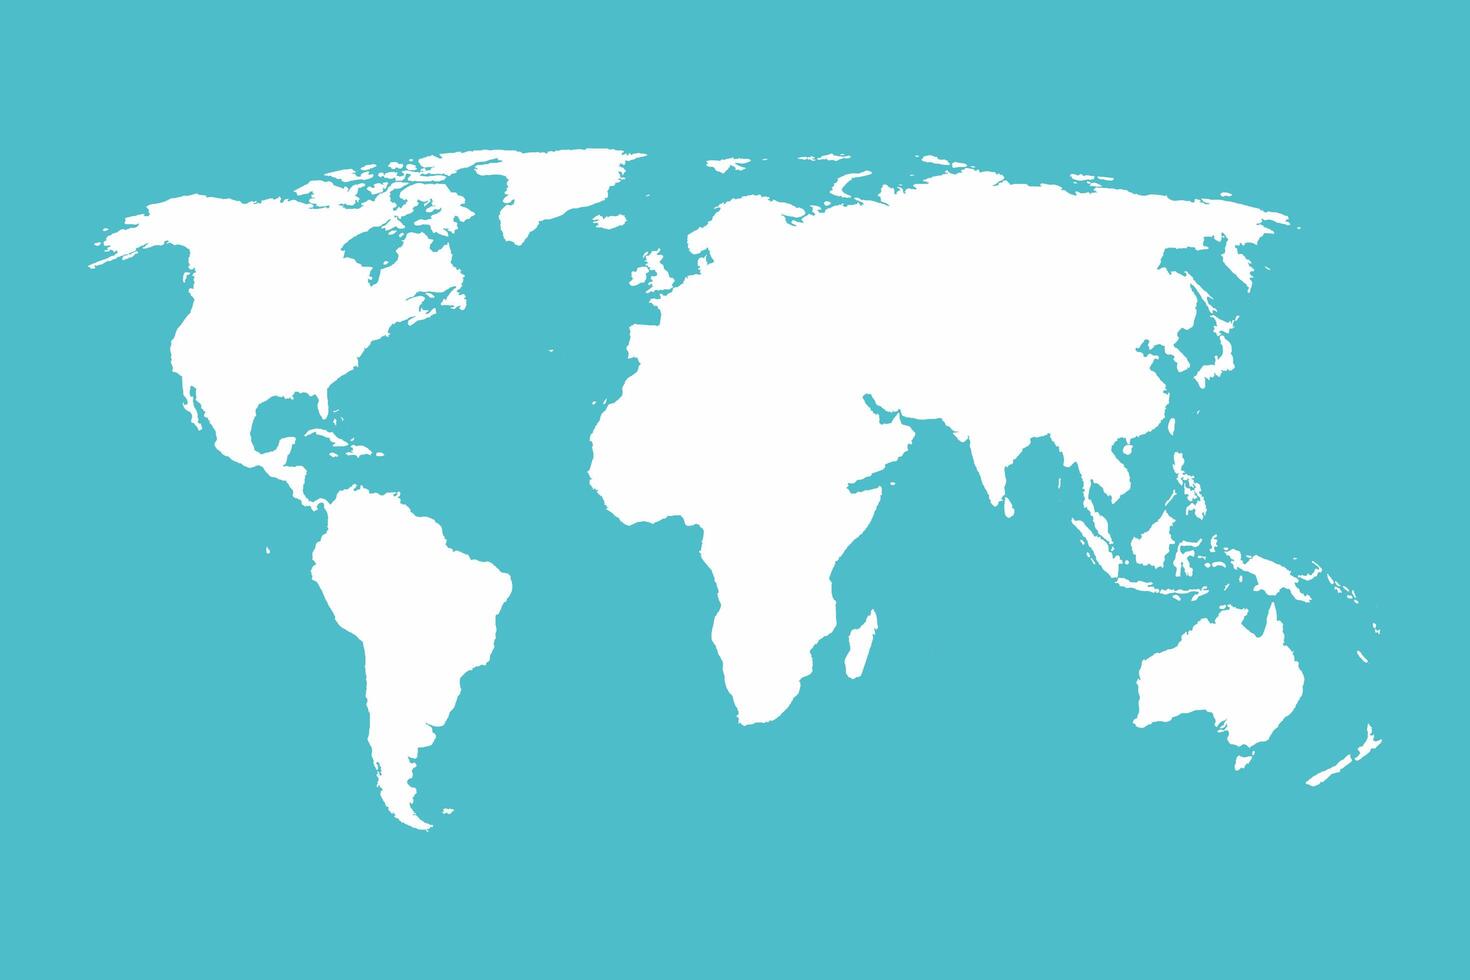 World map Illustration vector